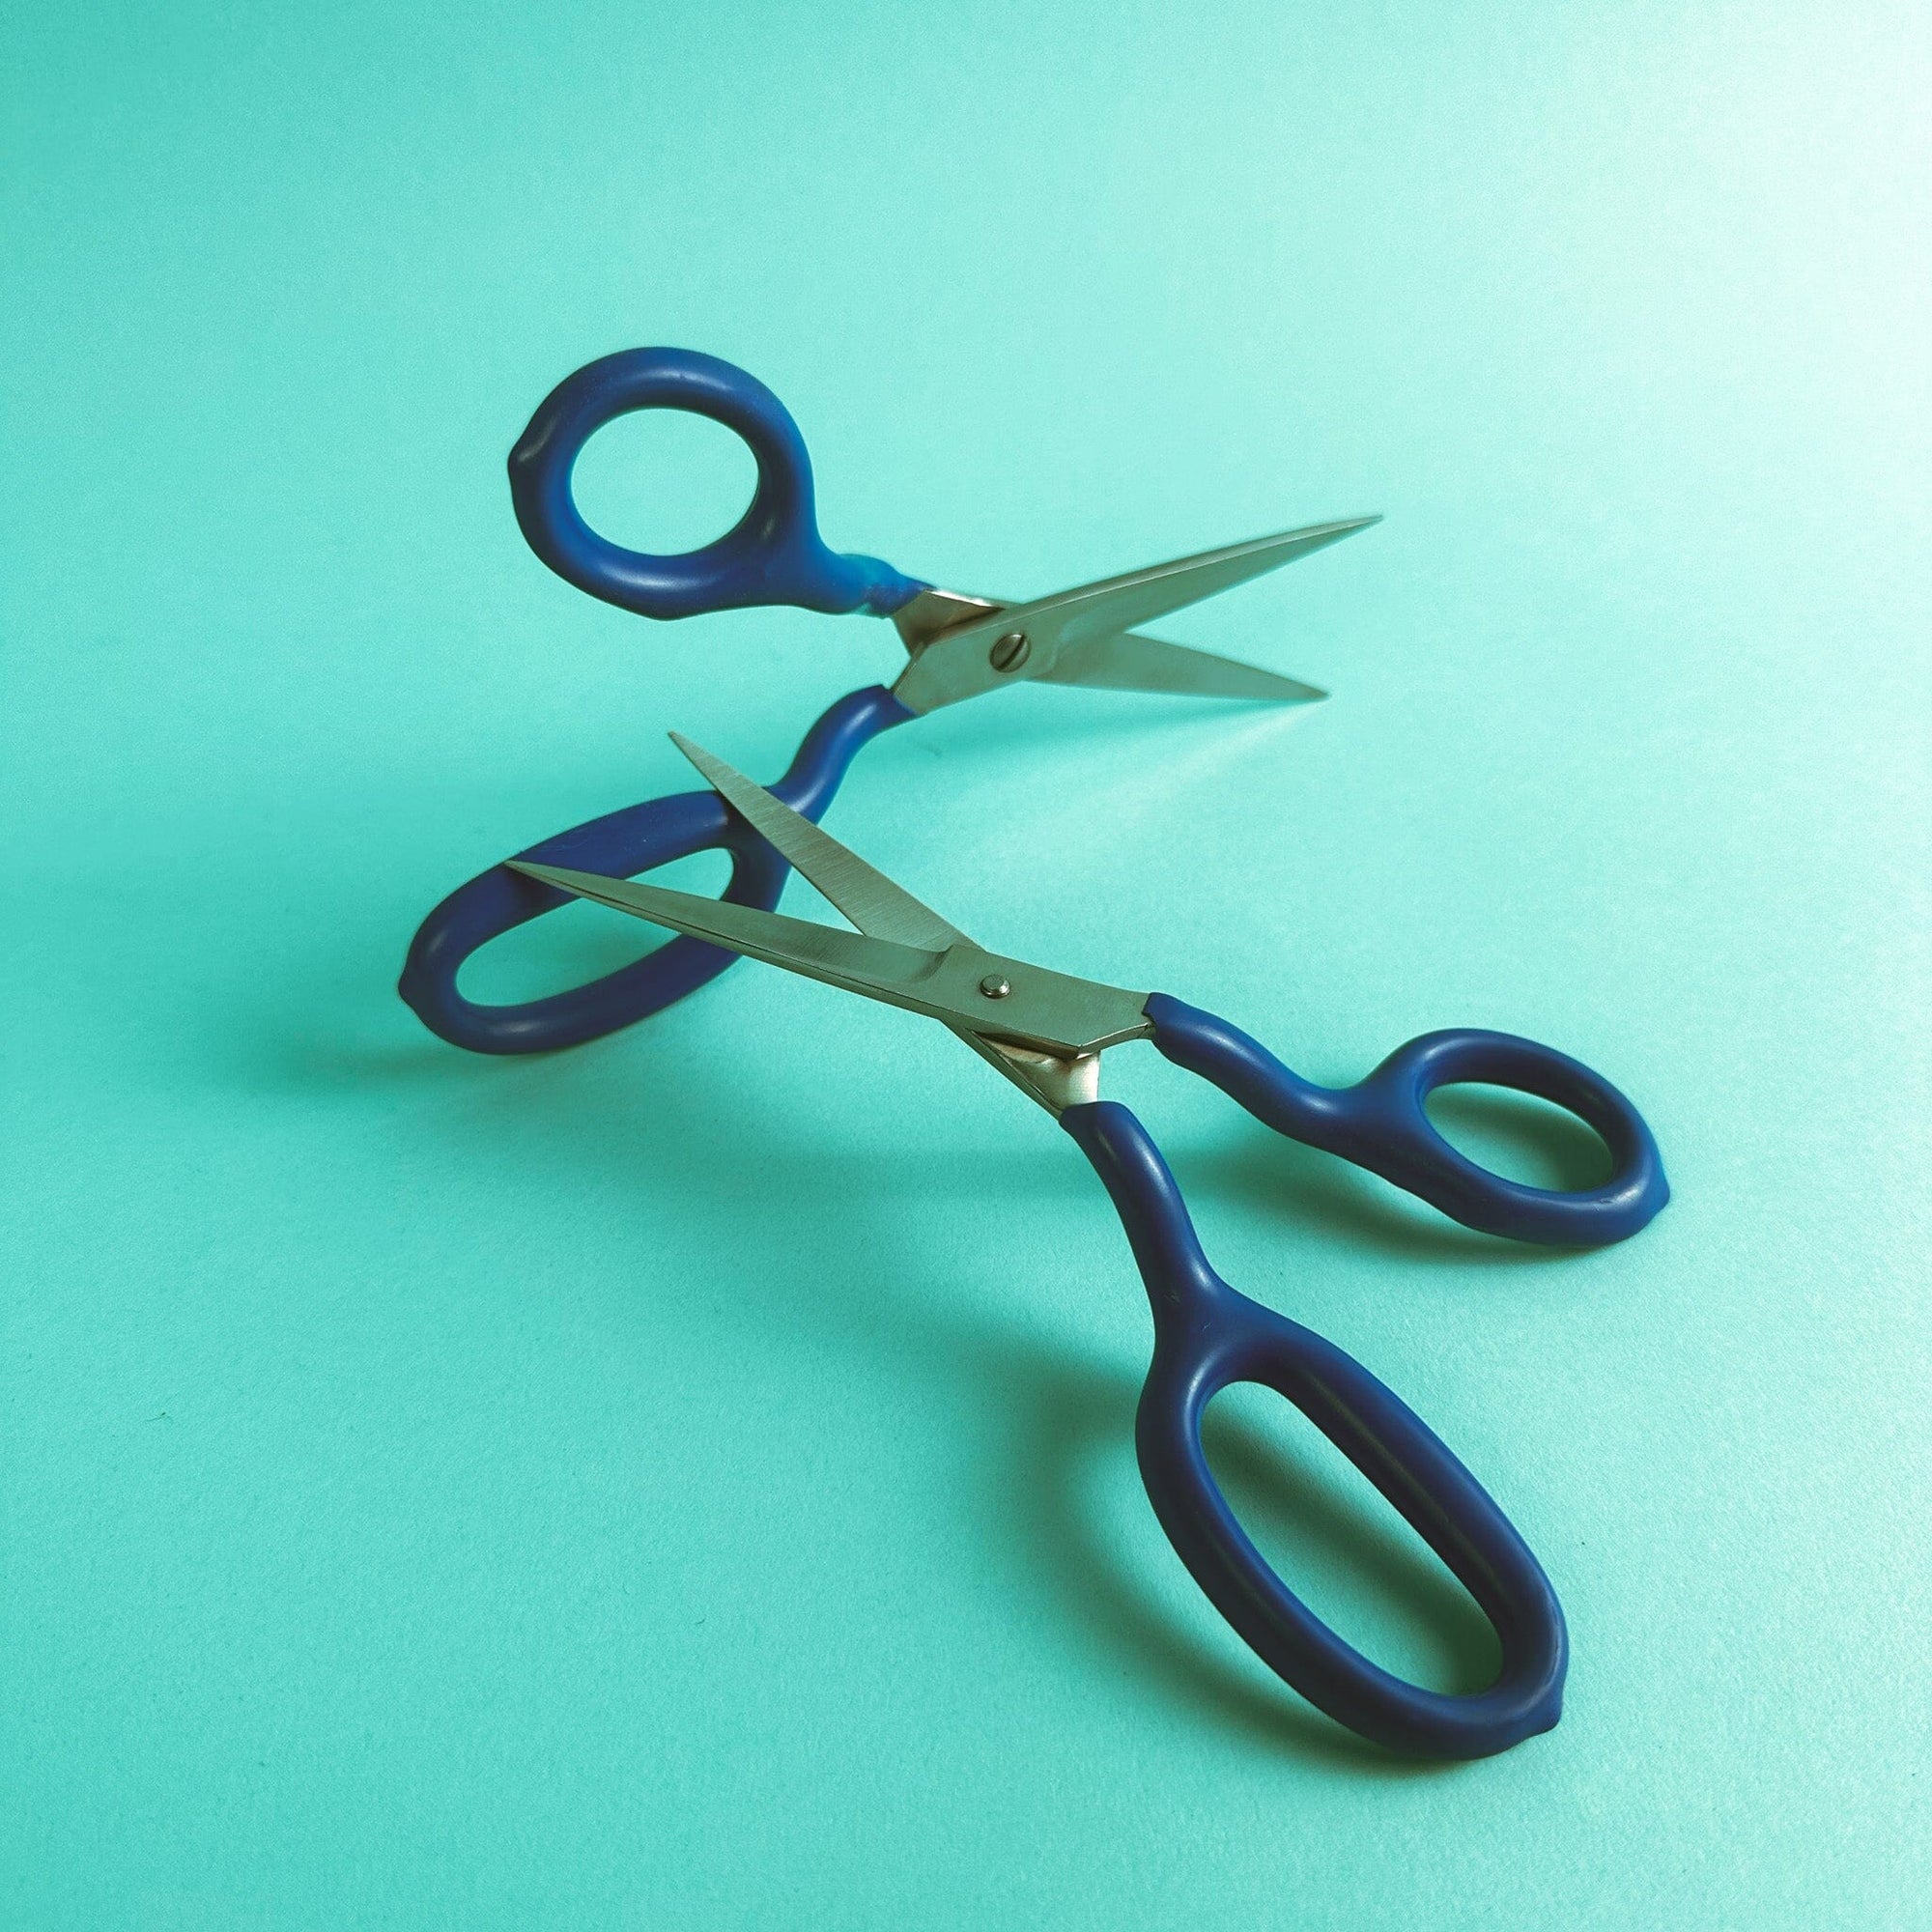 Bent-Handle Shaping Scissors Finishing Tuft the World 